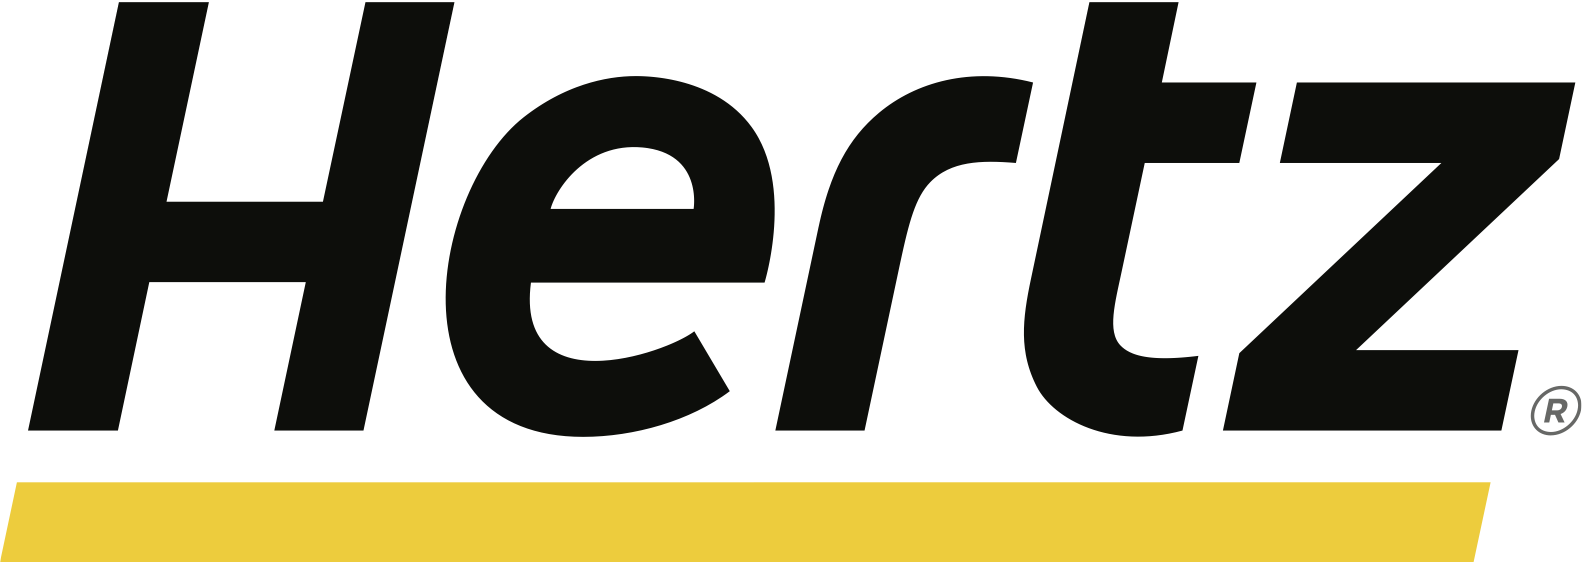 hertz updated logo cymk